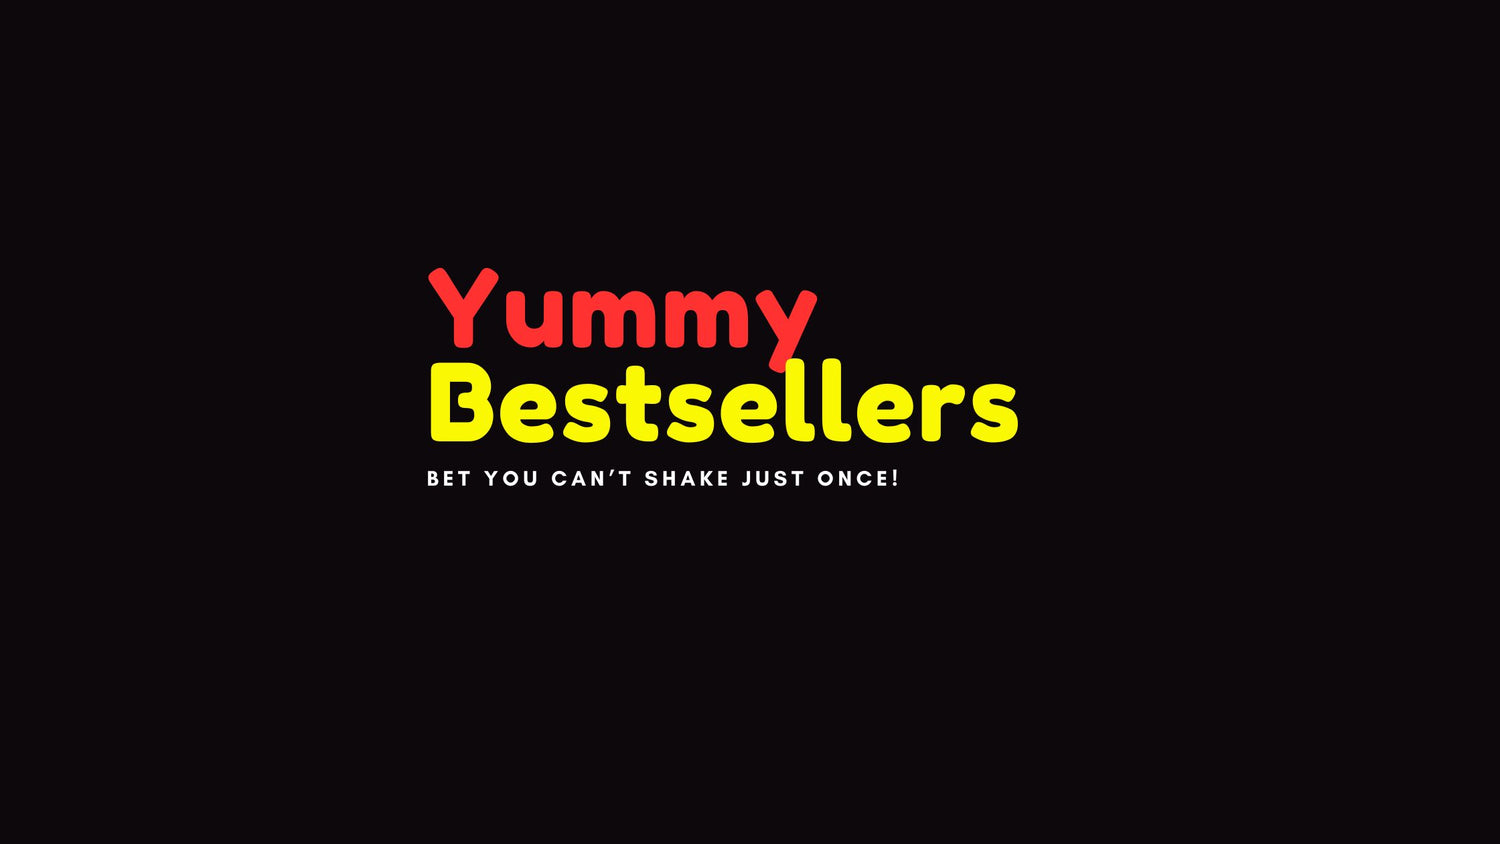 Yummy Bestsellers